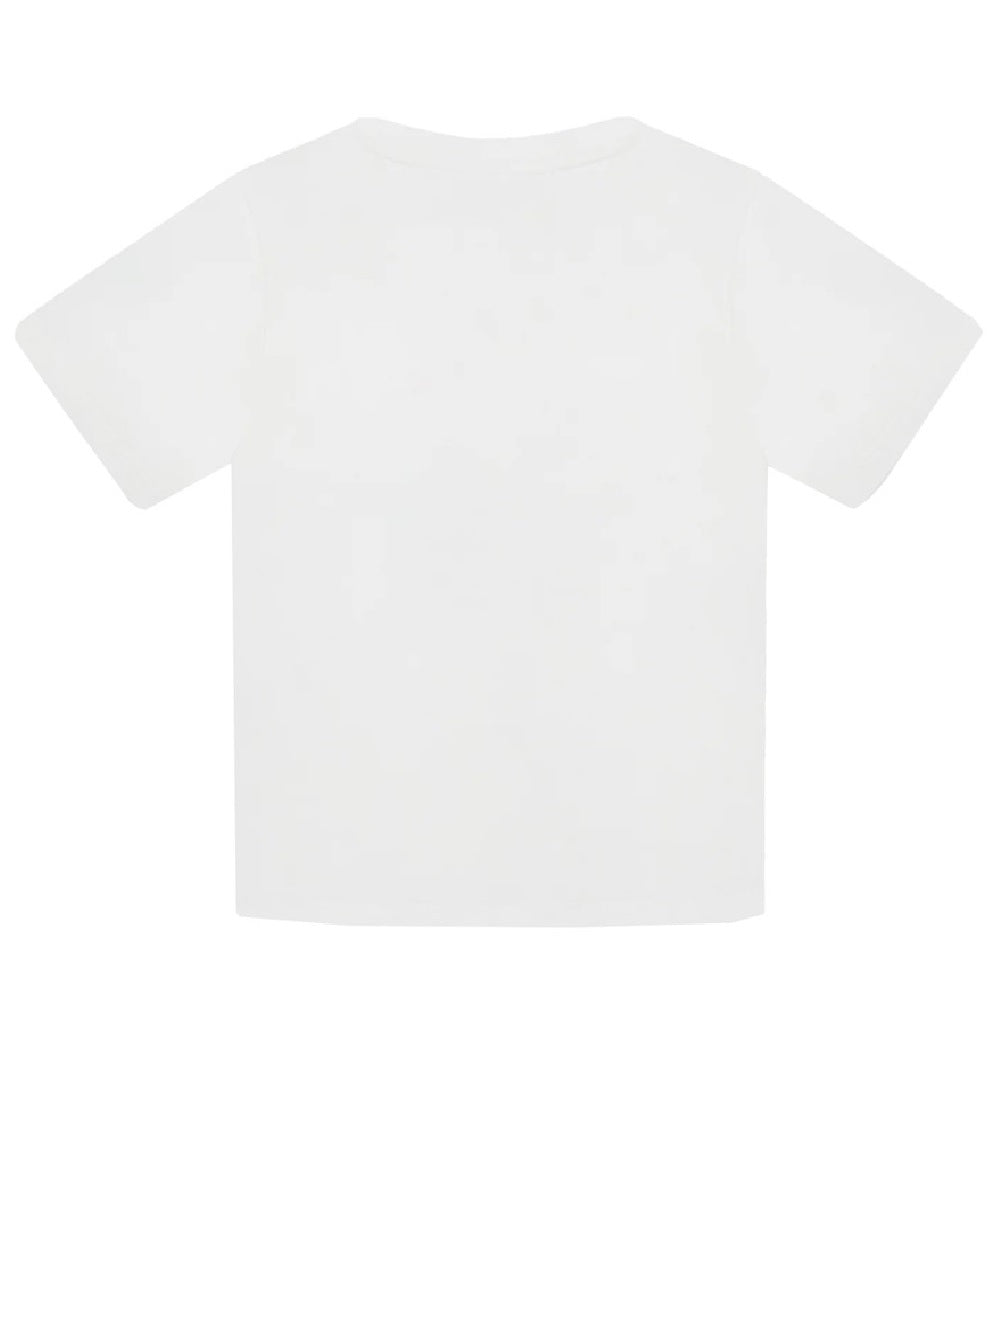 T-shirt Guess Kids modello J2GI22K6YW1 con maxi logo con strass applicati